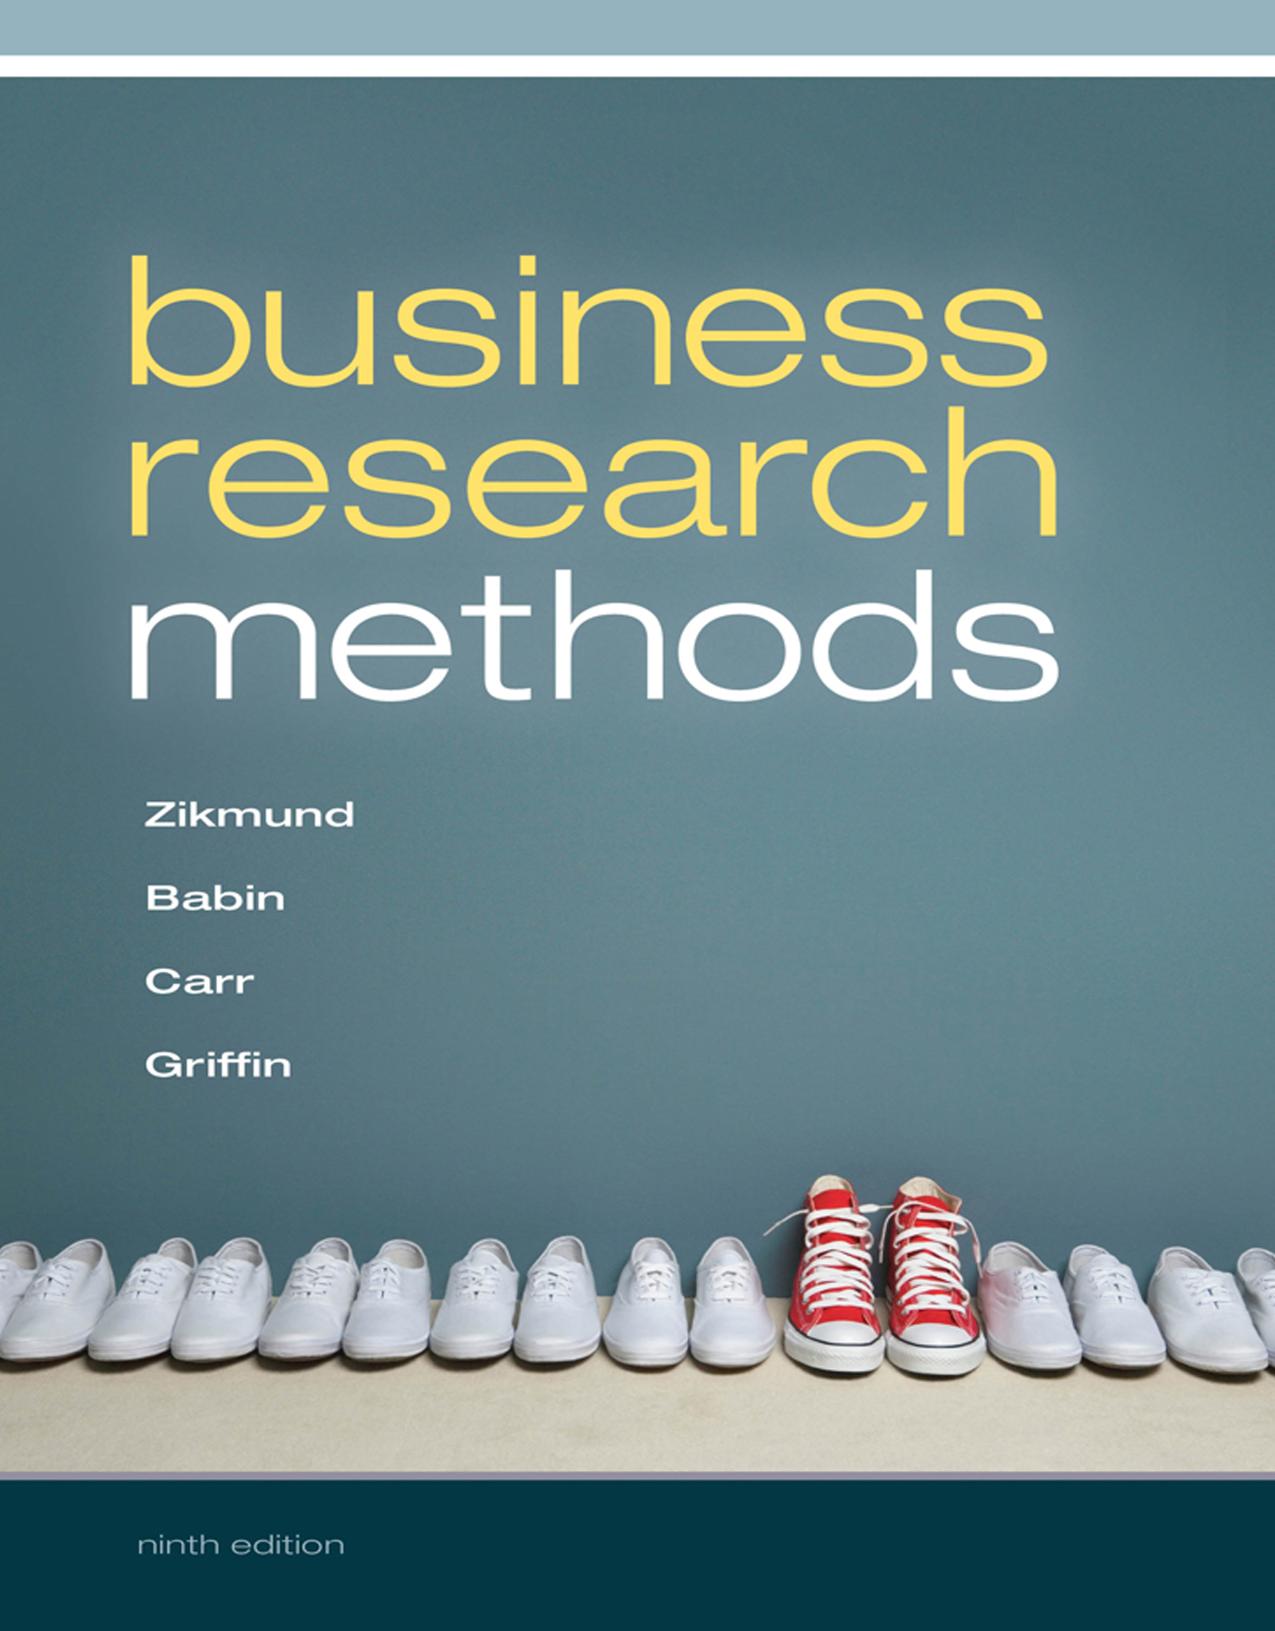 qualitative research methods books pdf